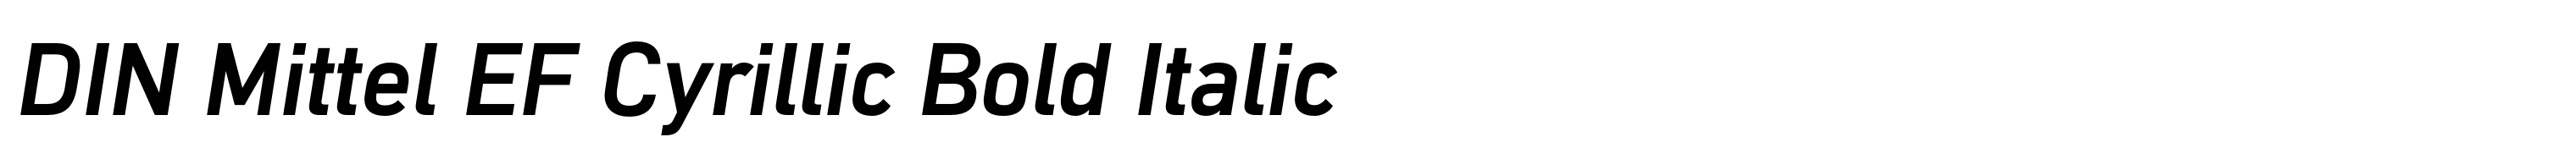 DIN Mittel EF Cyrillic Bold Italic